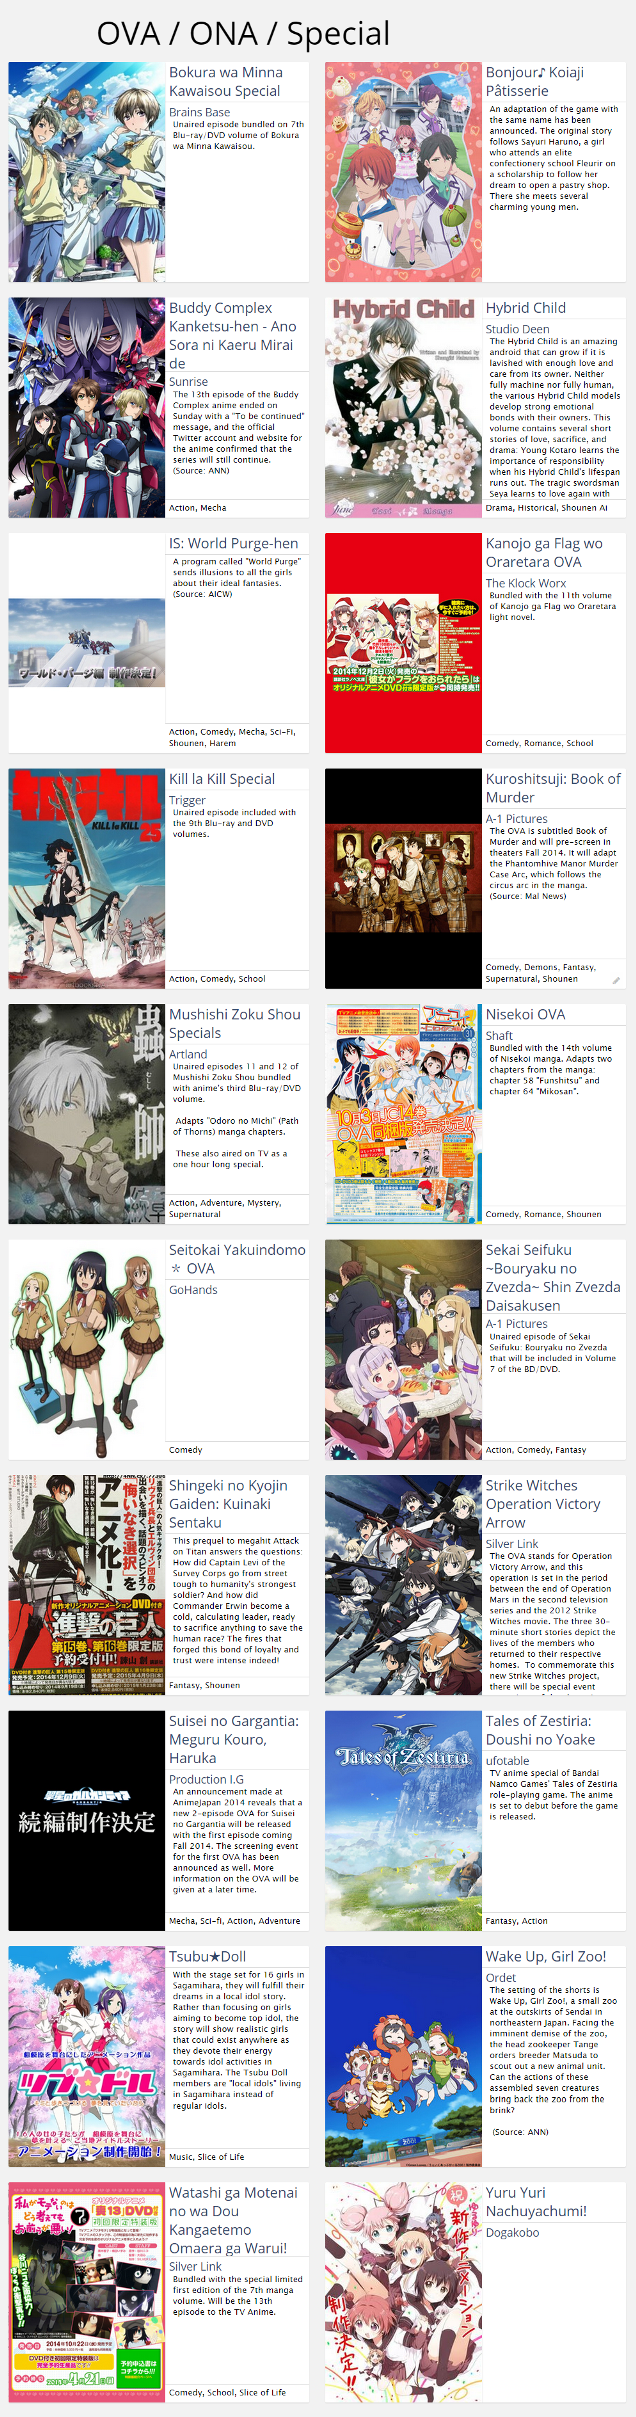 Daftar Anime Fall 2014